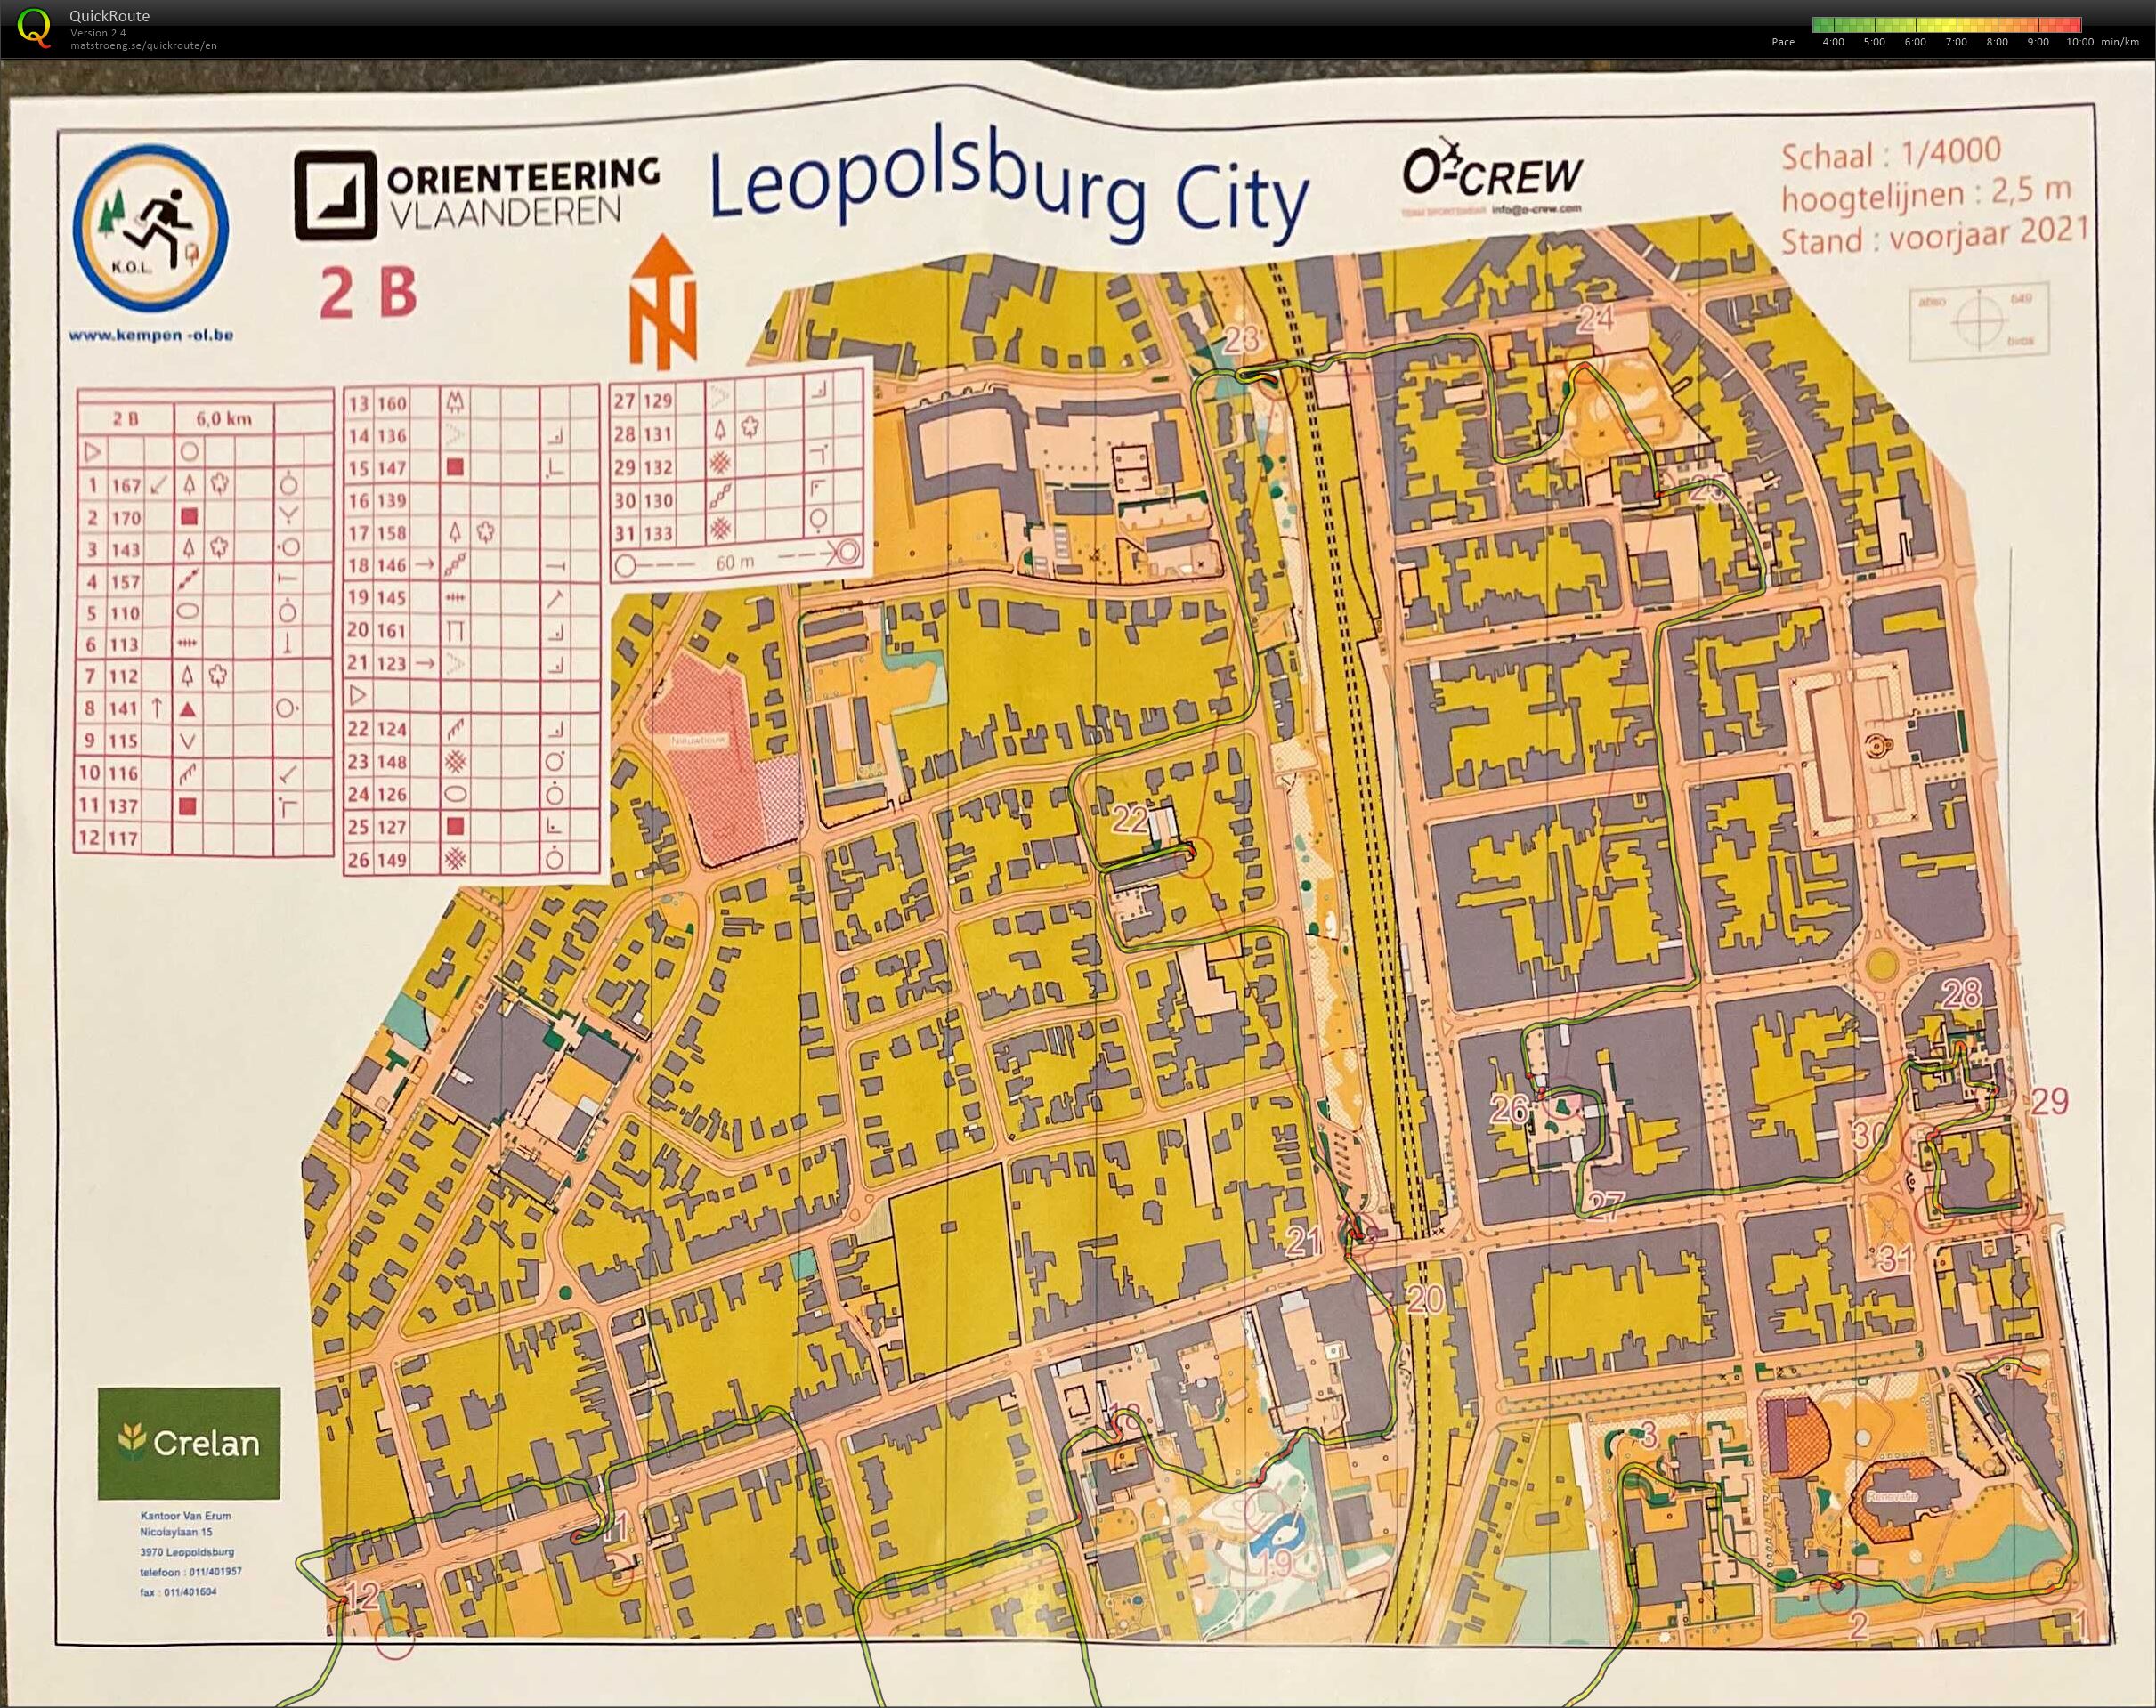 Leopoldsburg City - B (06.06.2021)